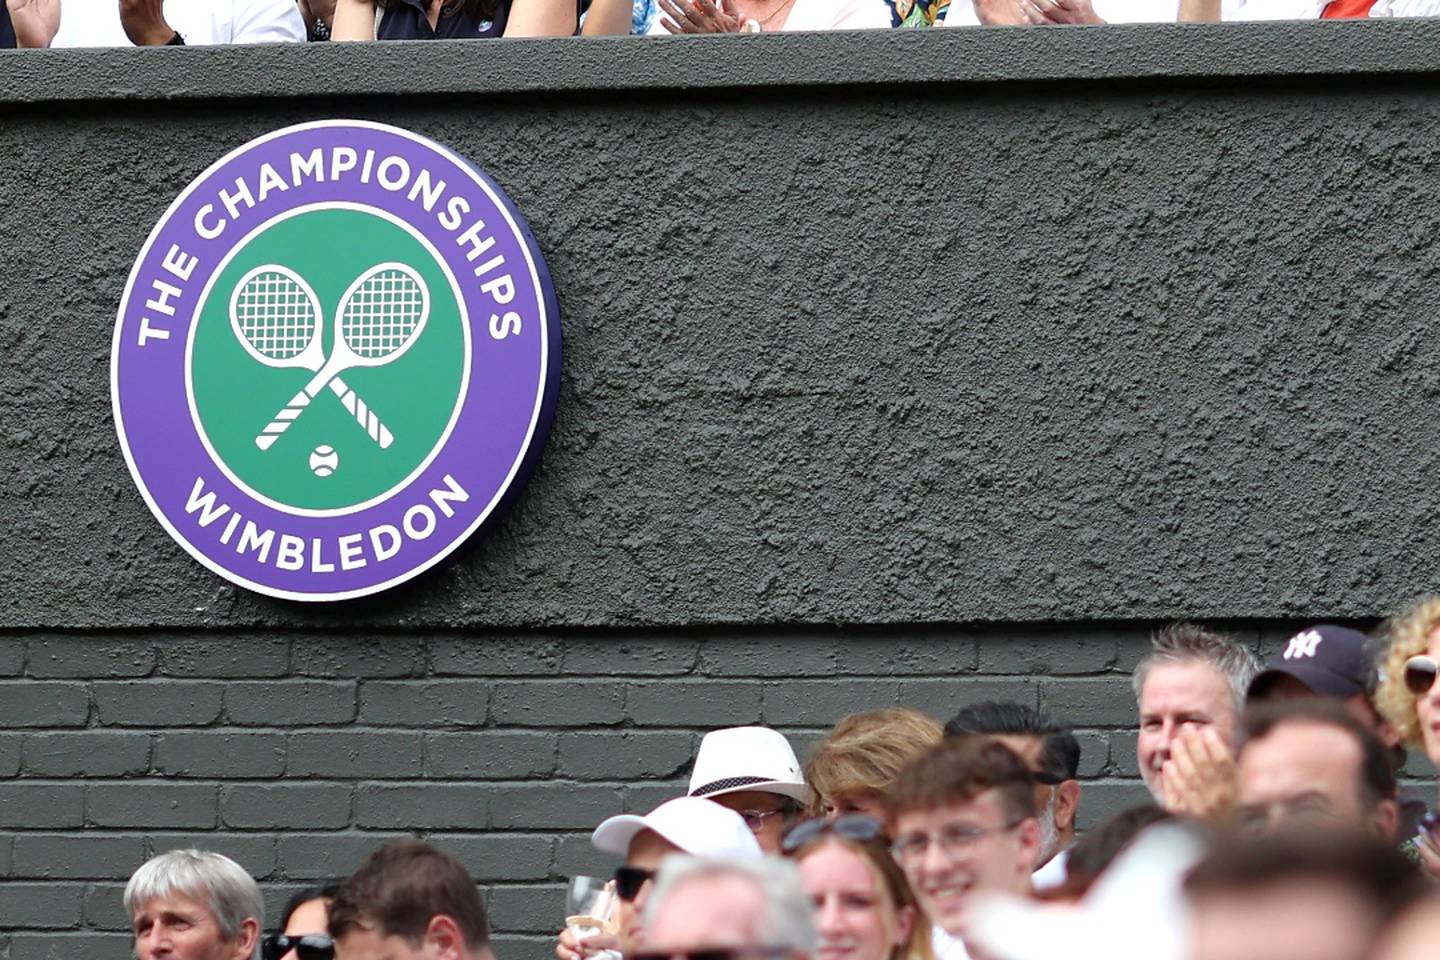 Wimbledon was wrong to ban Russians, says Rublev